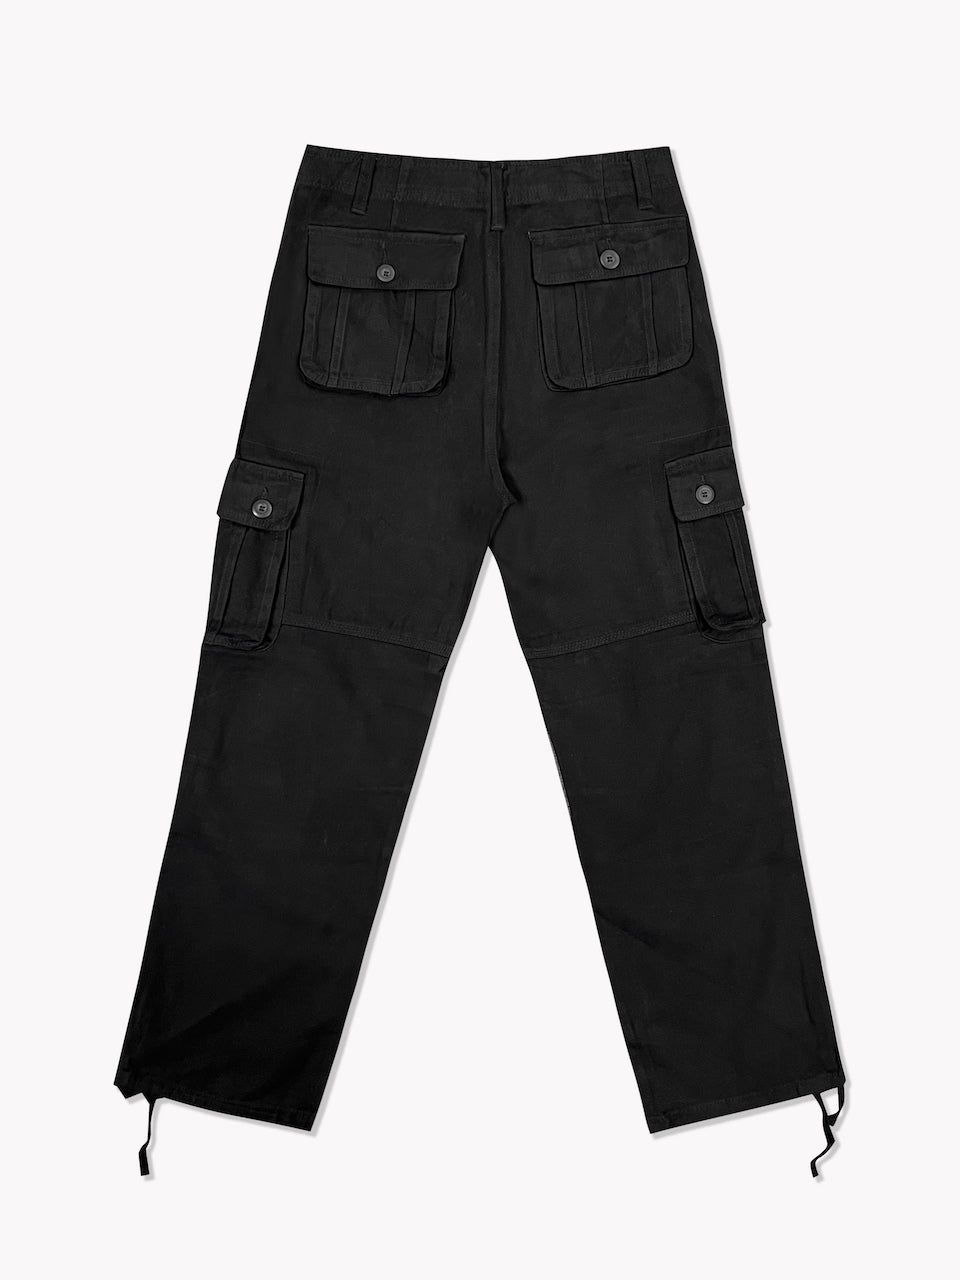 Buy U.S. POLO ASSN. Boys 6 Pocket Solid Cargo Pants | Shoppers Stop